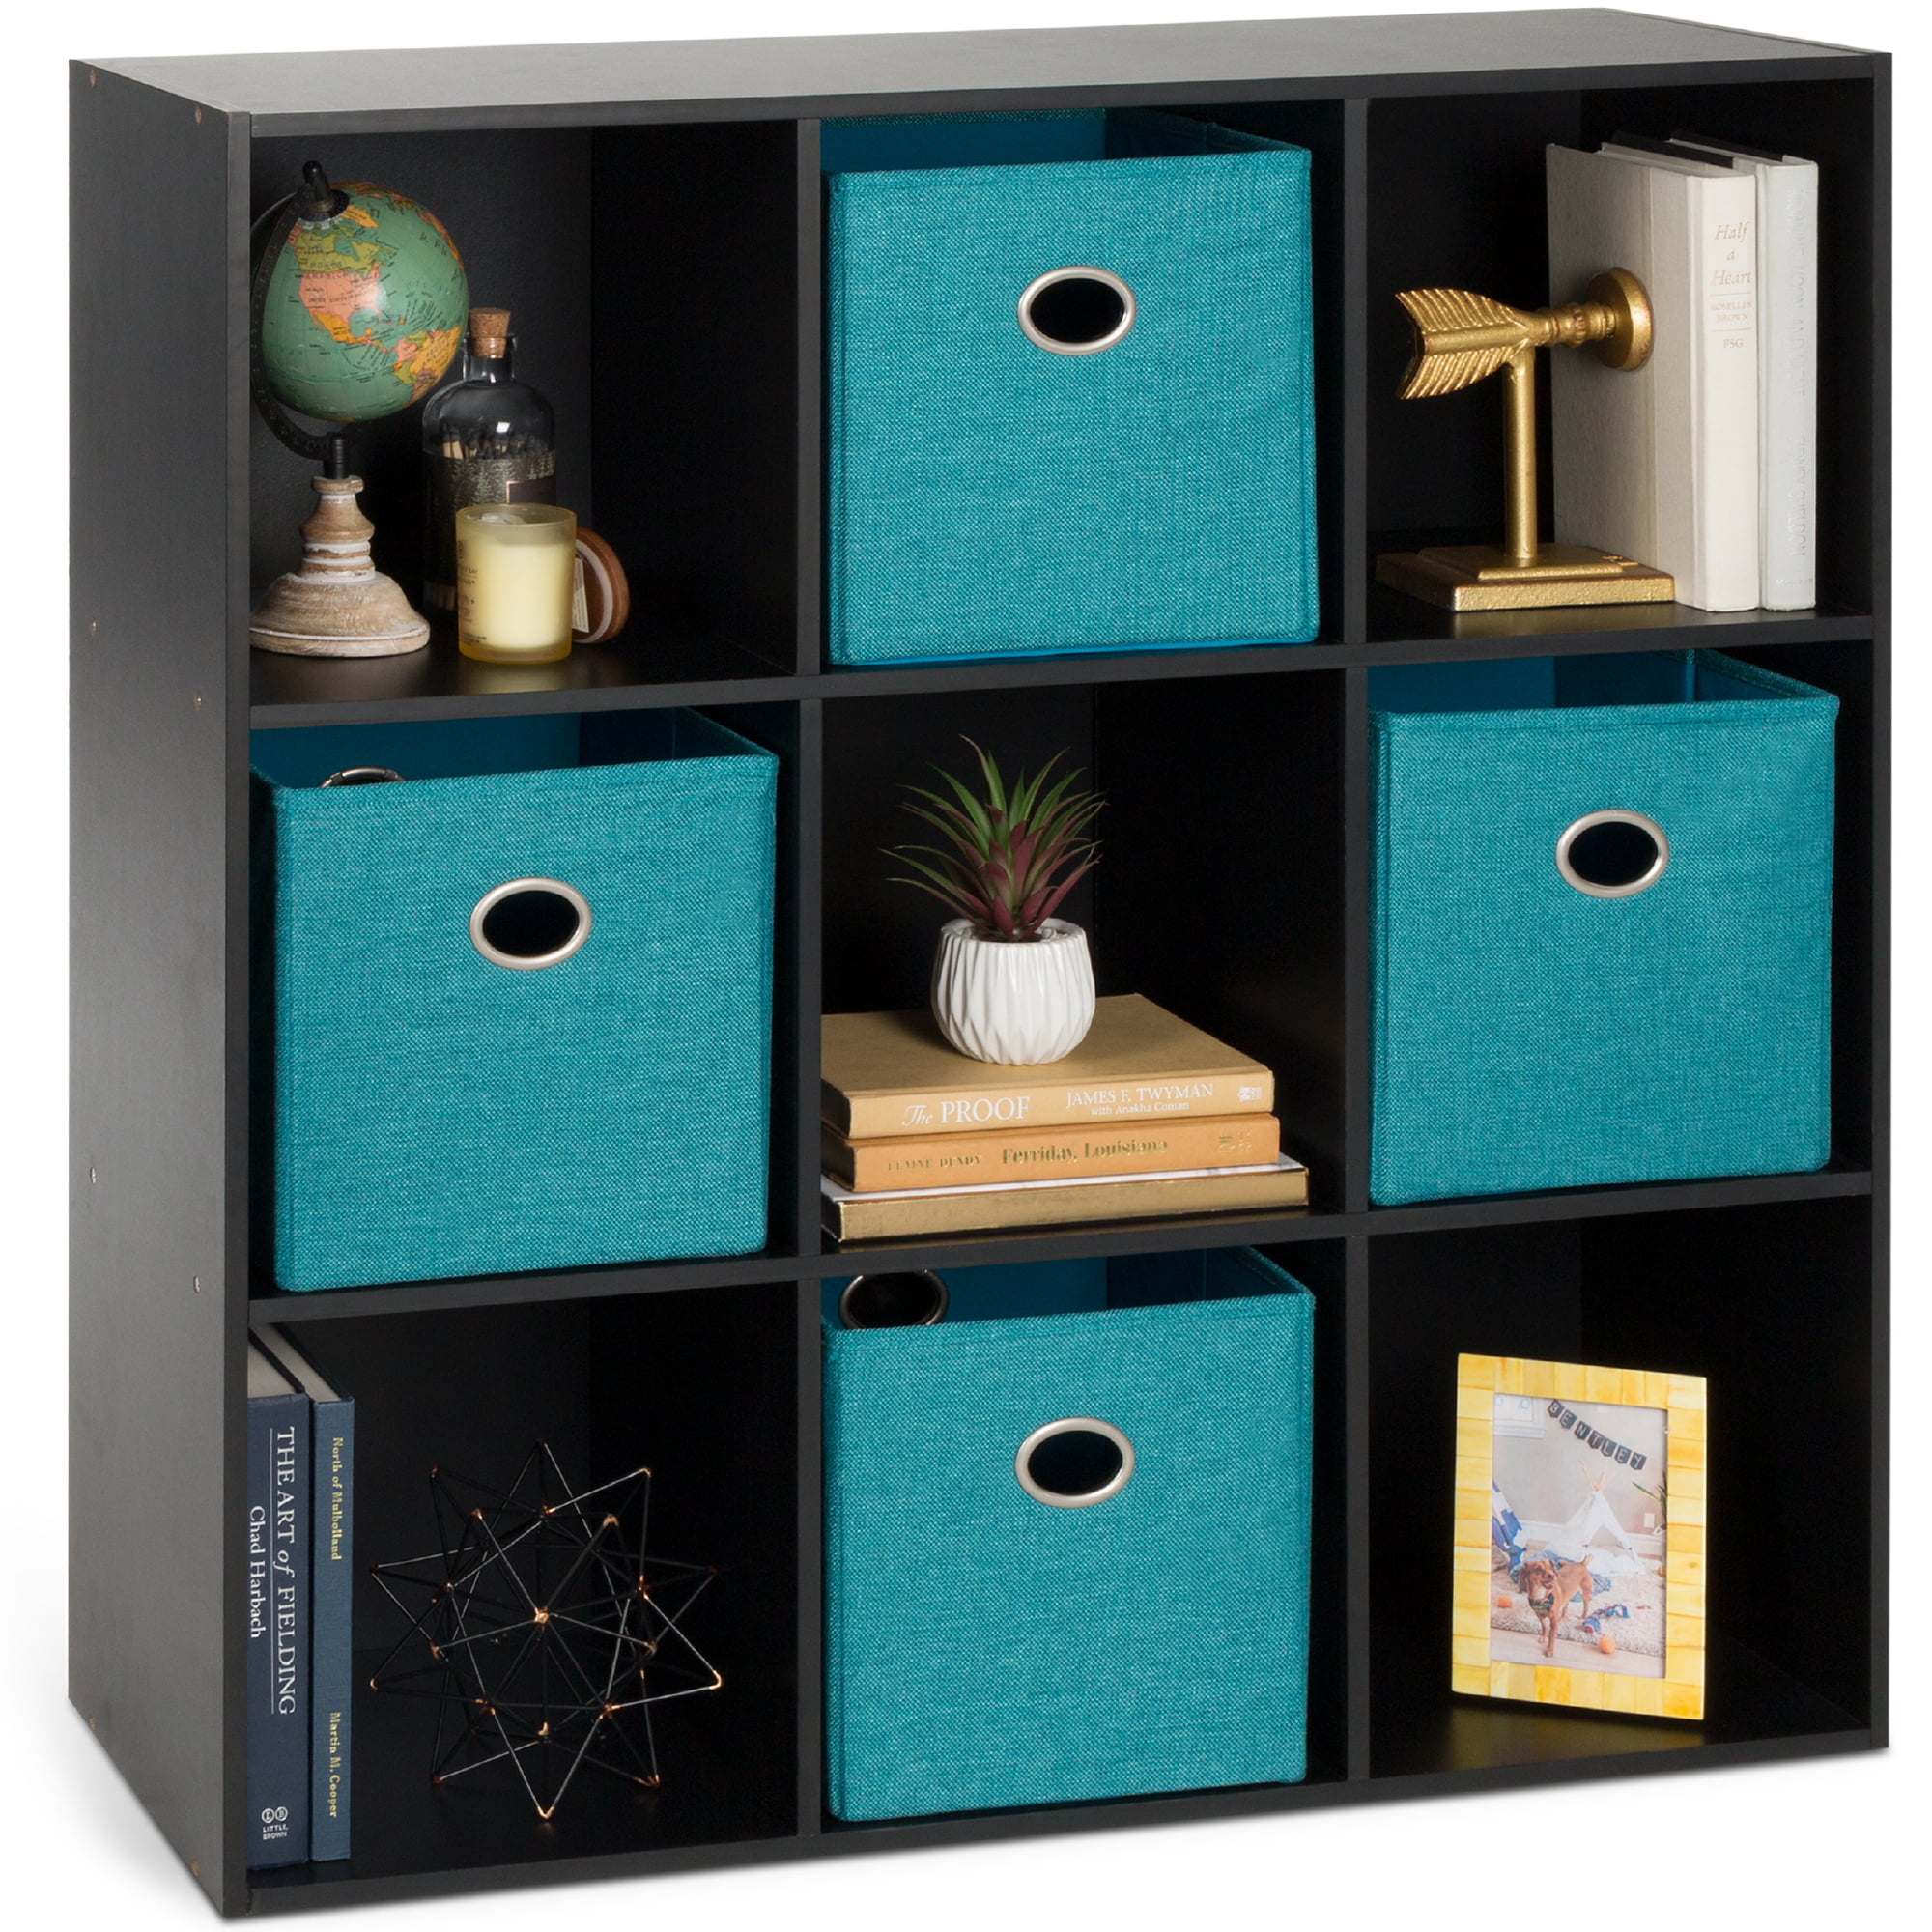 Details about   Bookcase 9-Cube Shelving Organizer Home Office Book Storage 4-Shelf Bookshelf US 